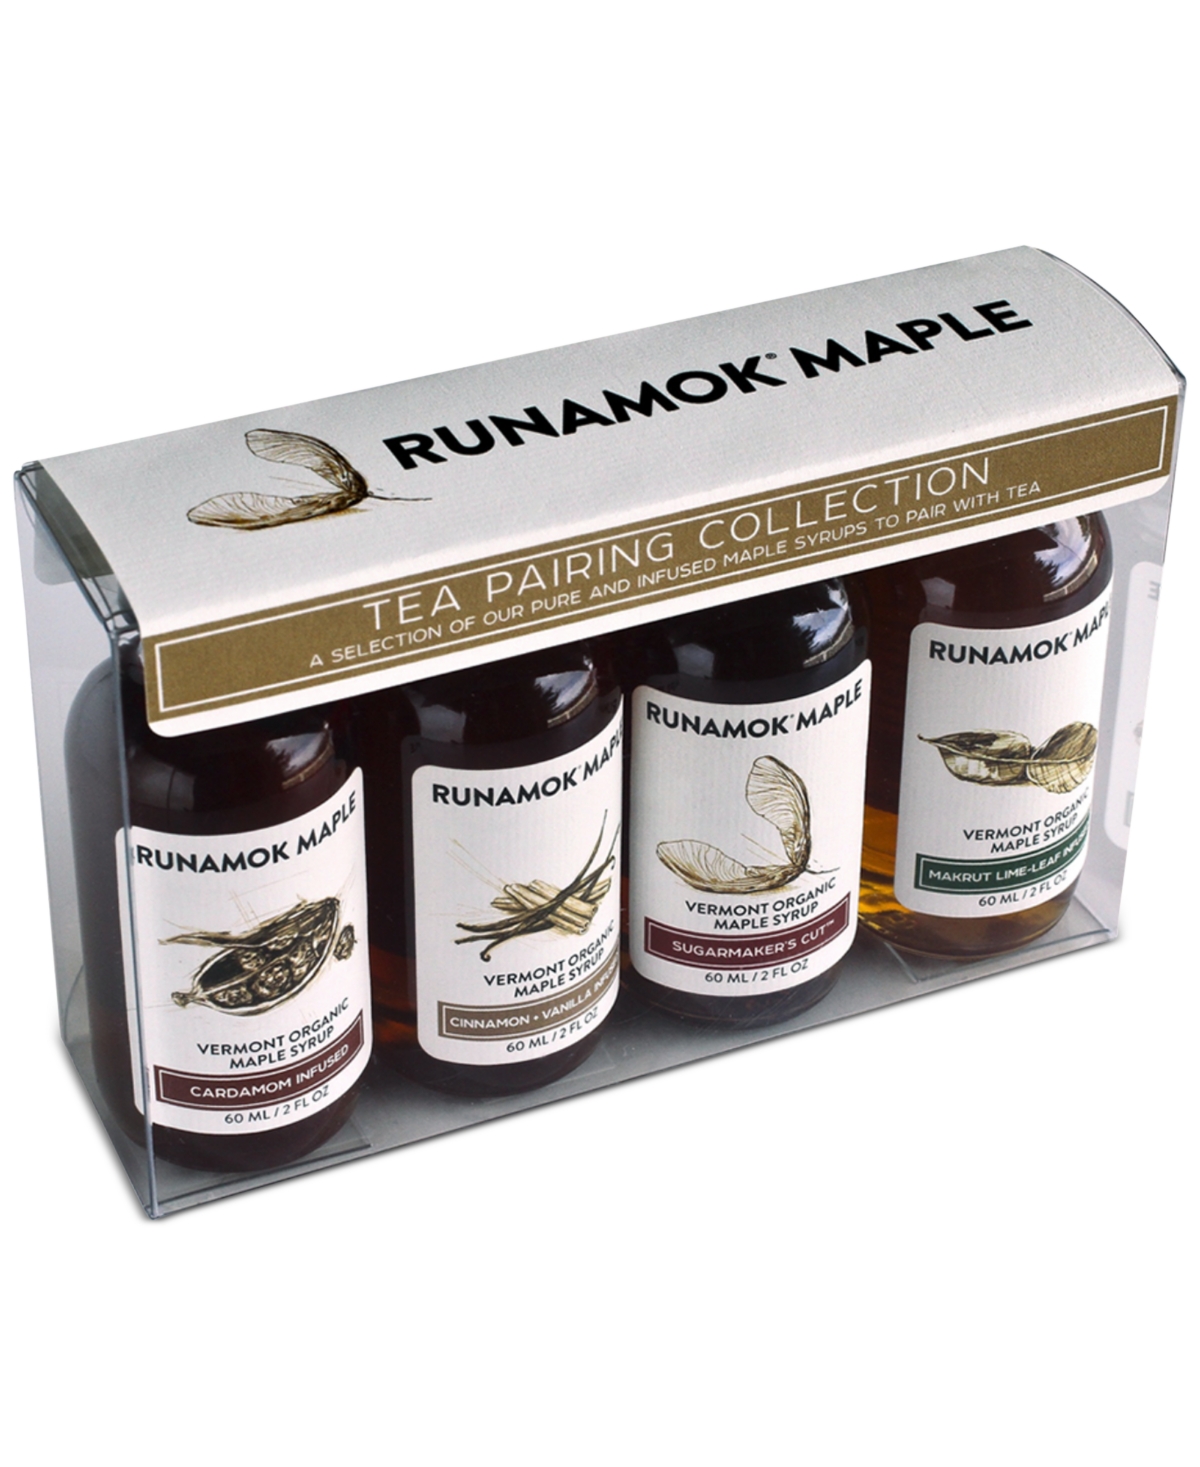 Runamok Maple Maple Syrup 4-piece Tea Pairing Collection